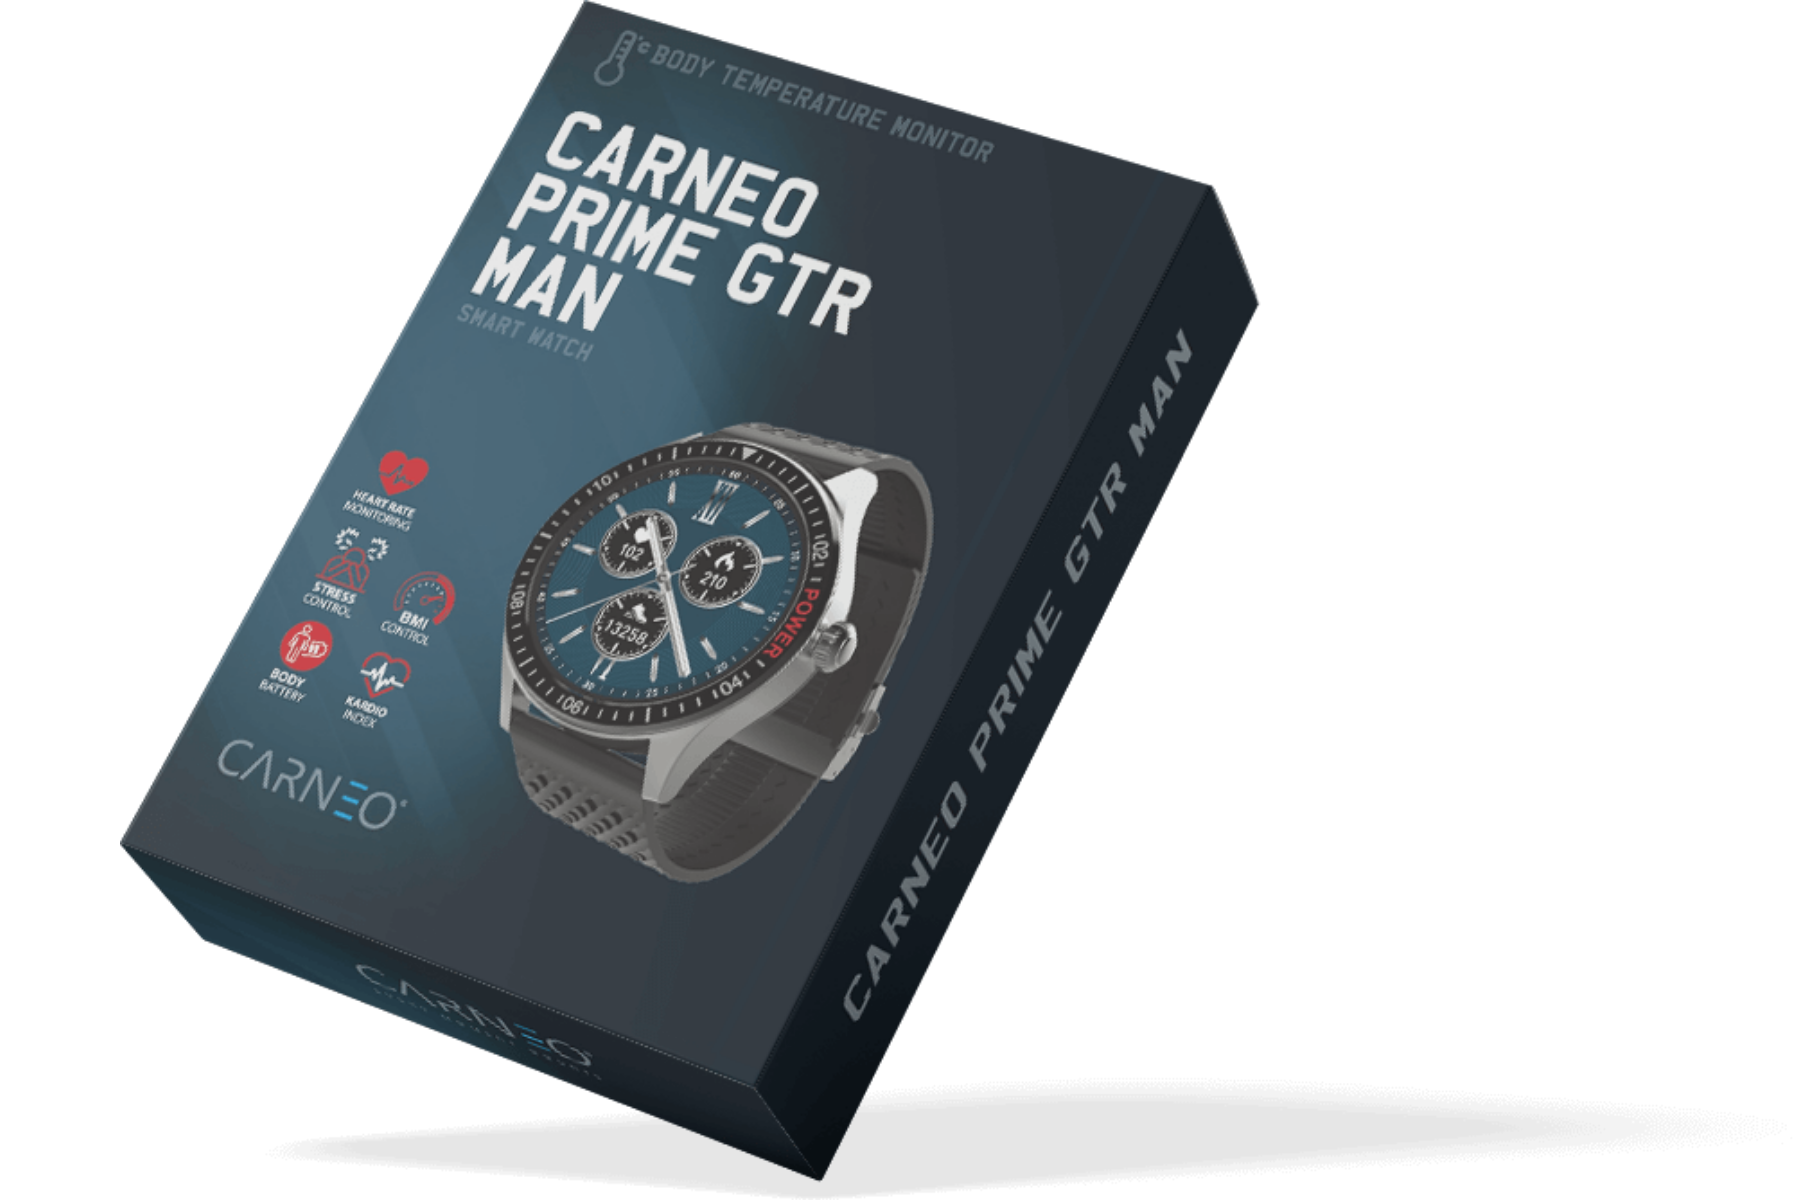 Smart hodinky Carneo Prime GTR Man Silver uvod